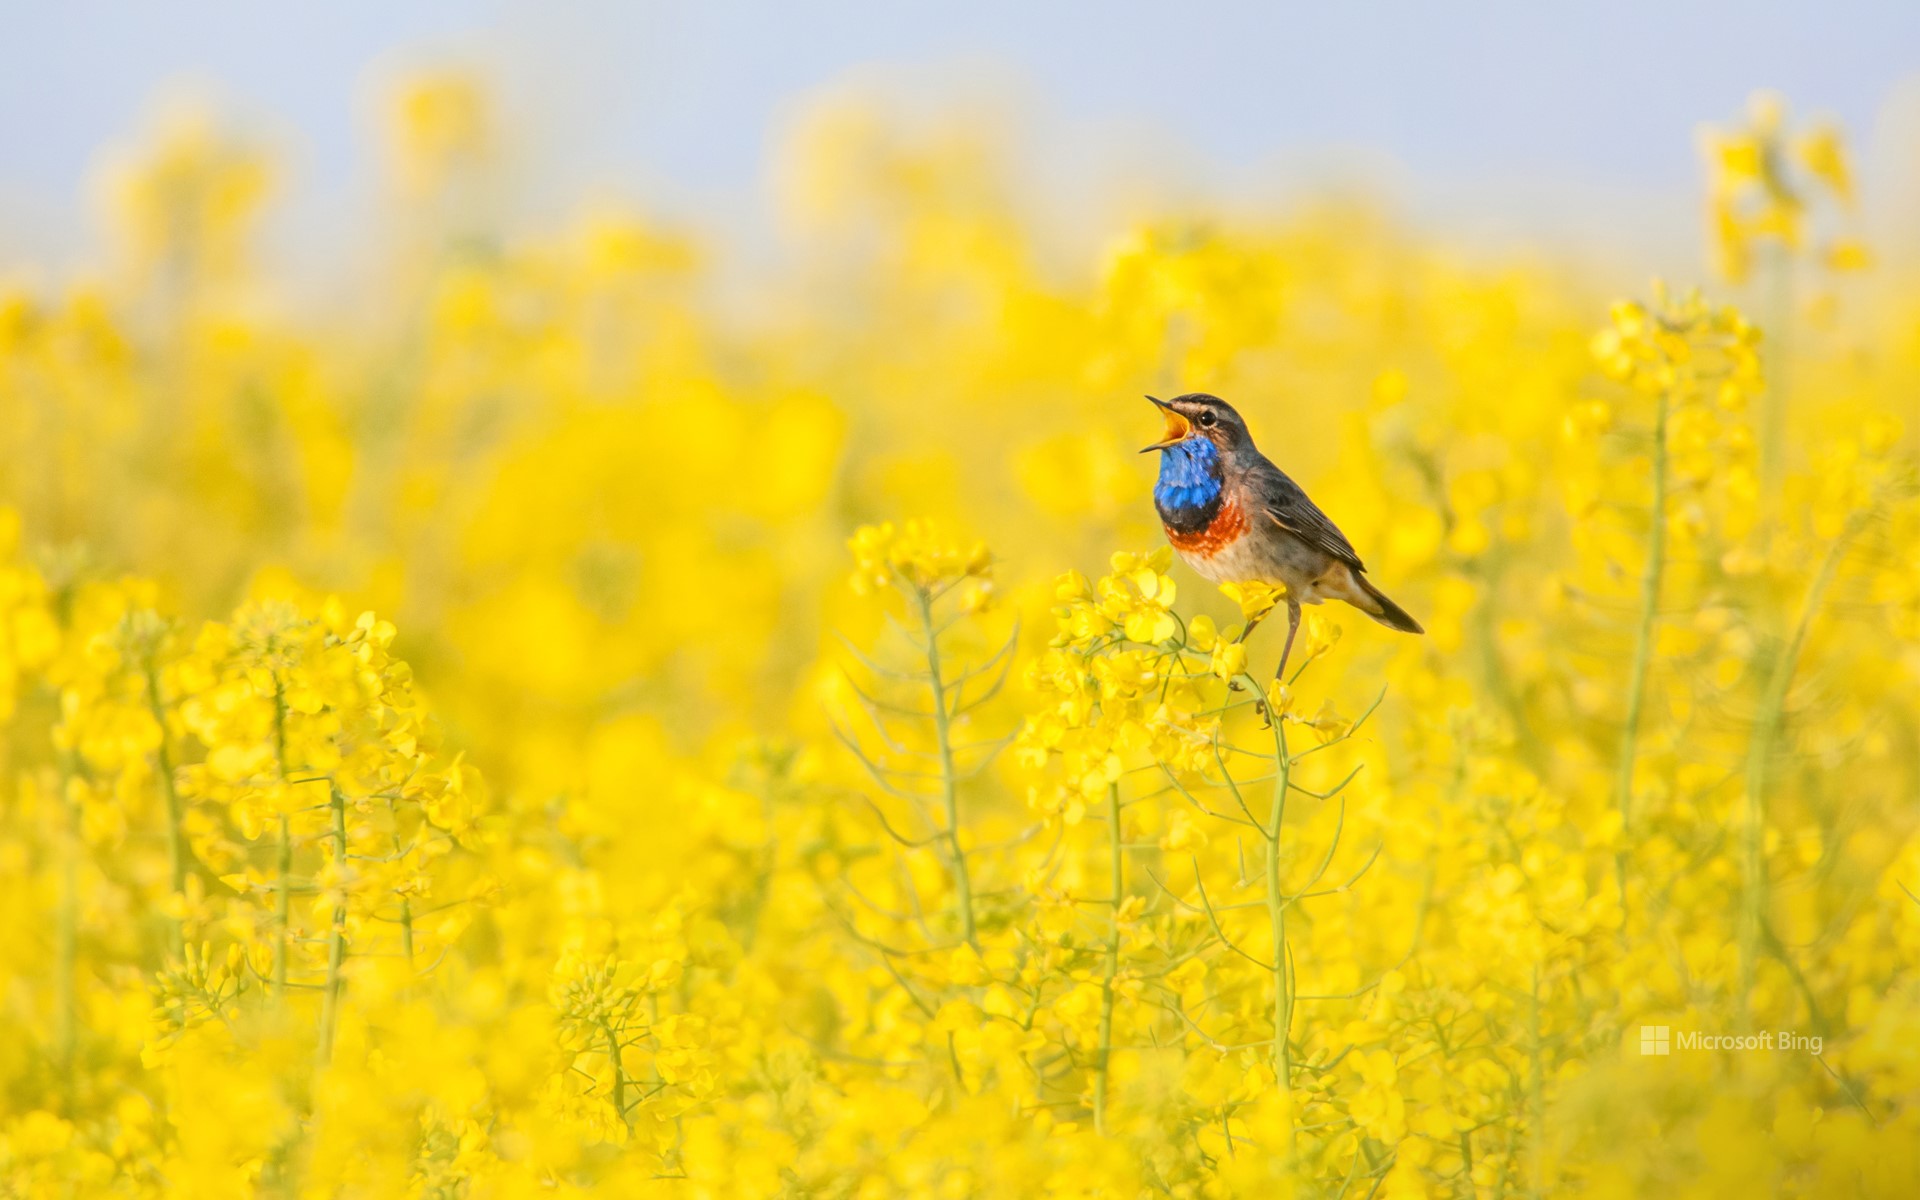 A bluethroat singing in a field